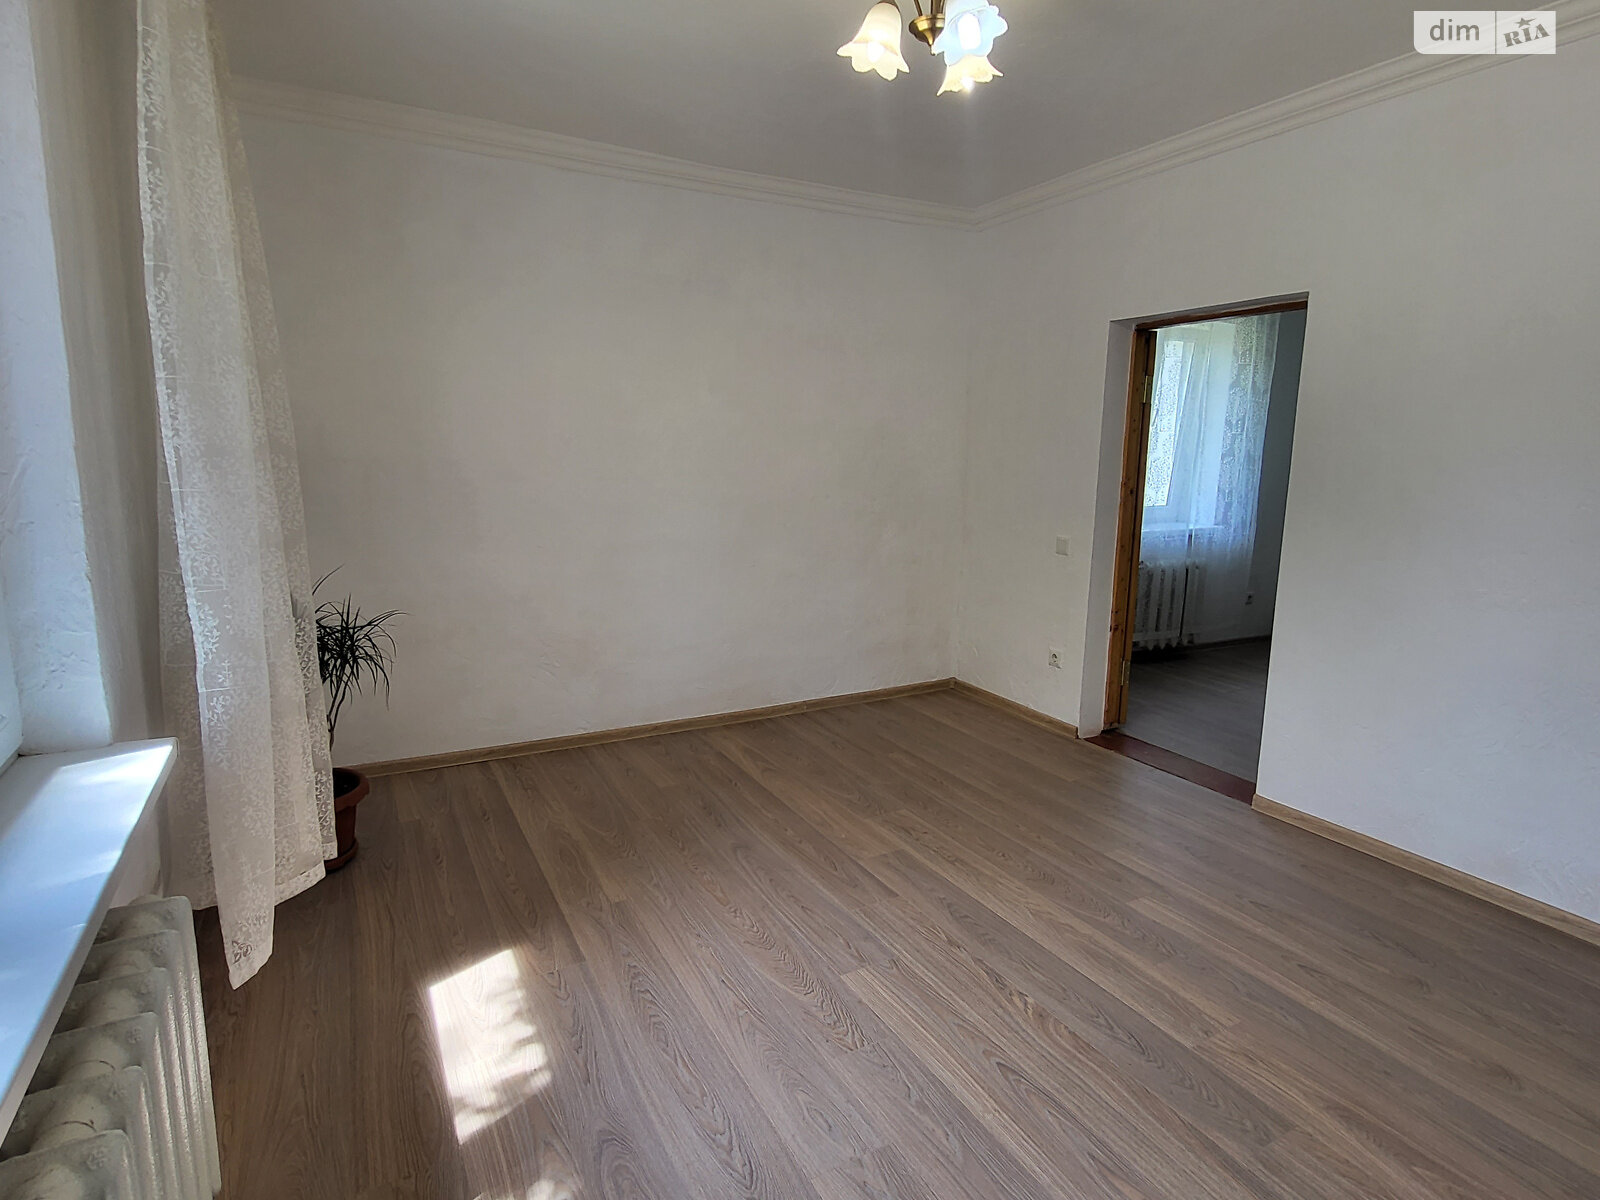 Продажа части дома в Черновцах, район Роша, 2 комнаты фото 1